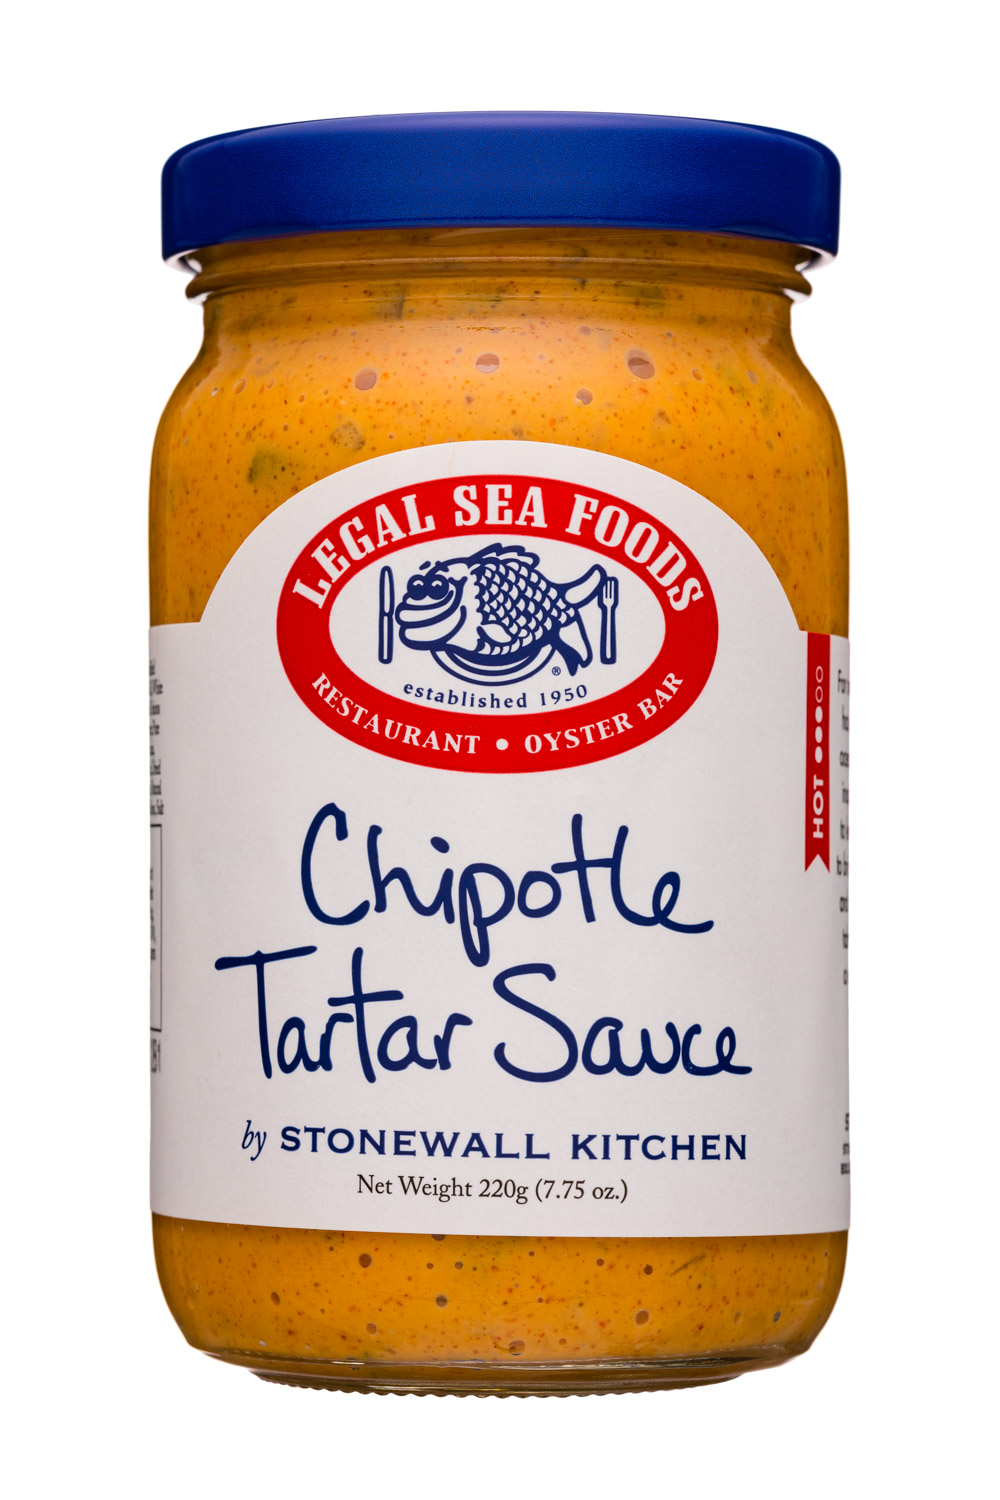 Chipotle Tartar Sauce